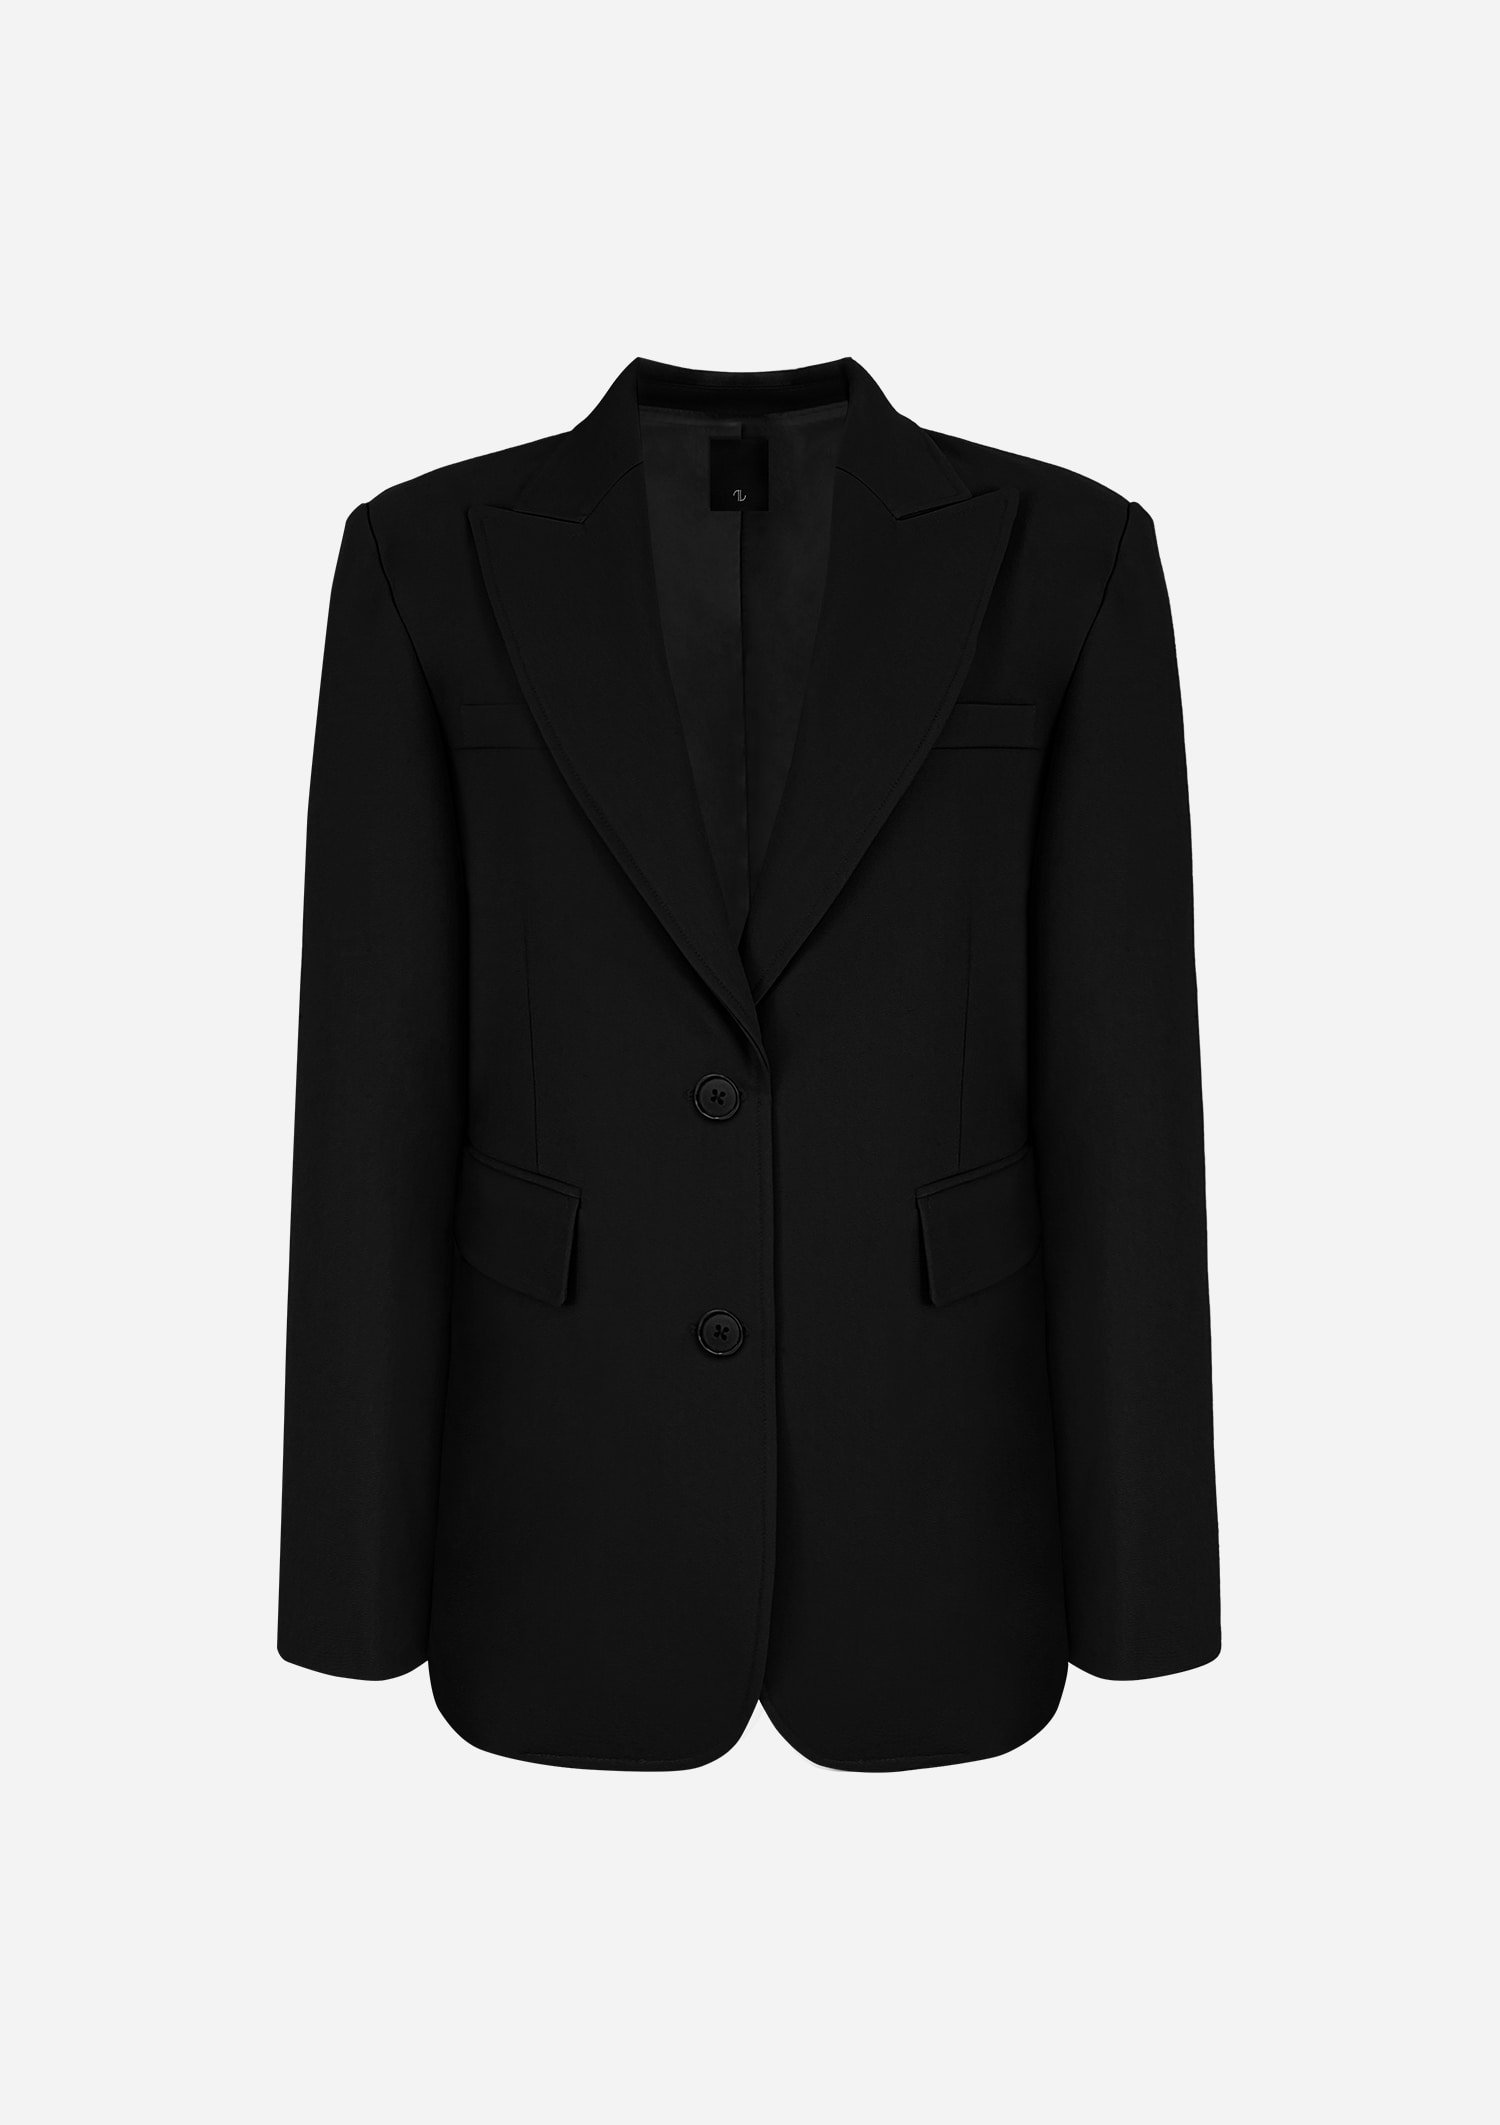 Jane vintage classic jacket - black